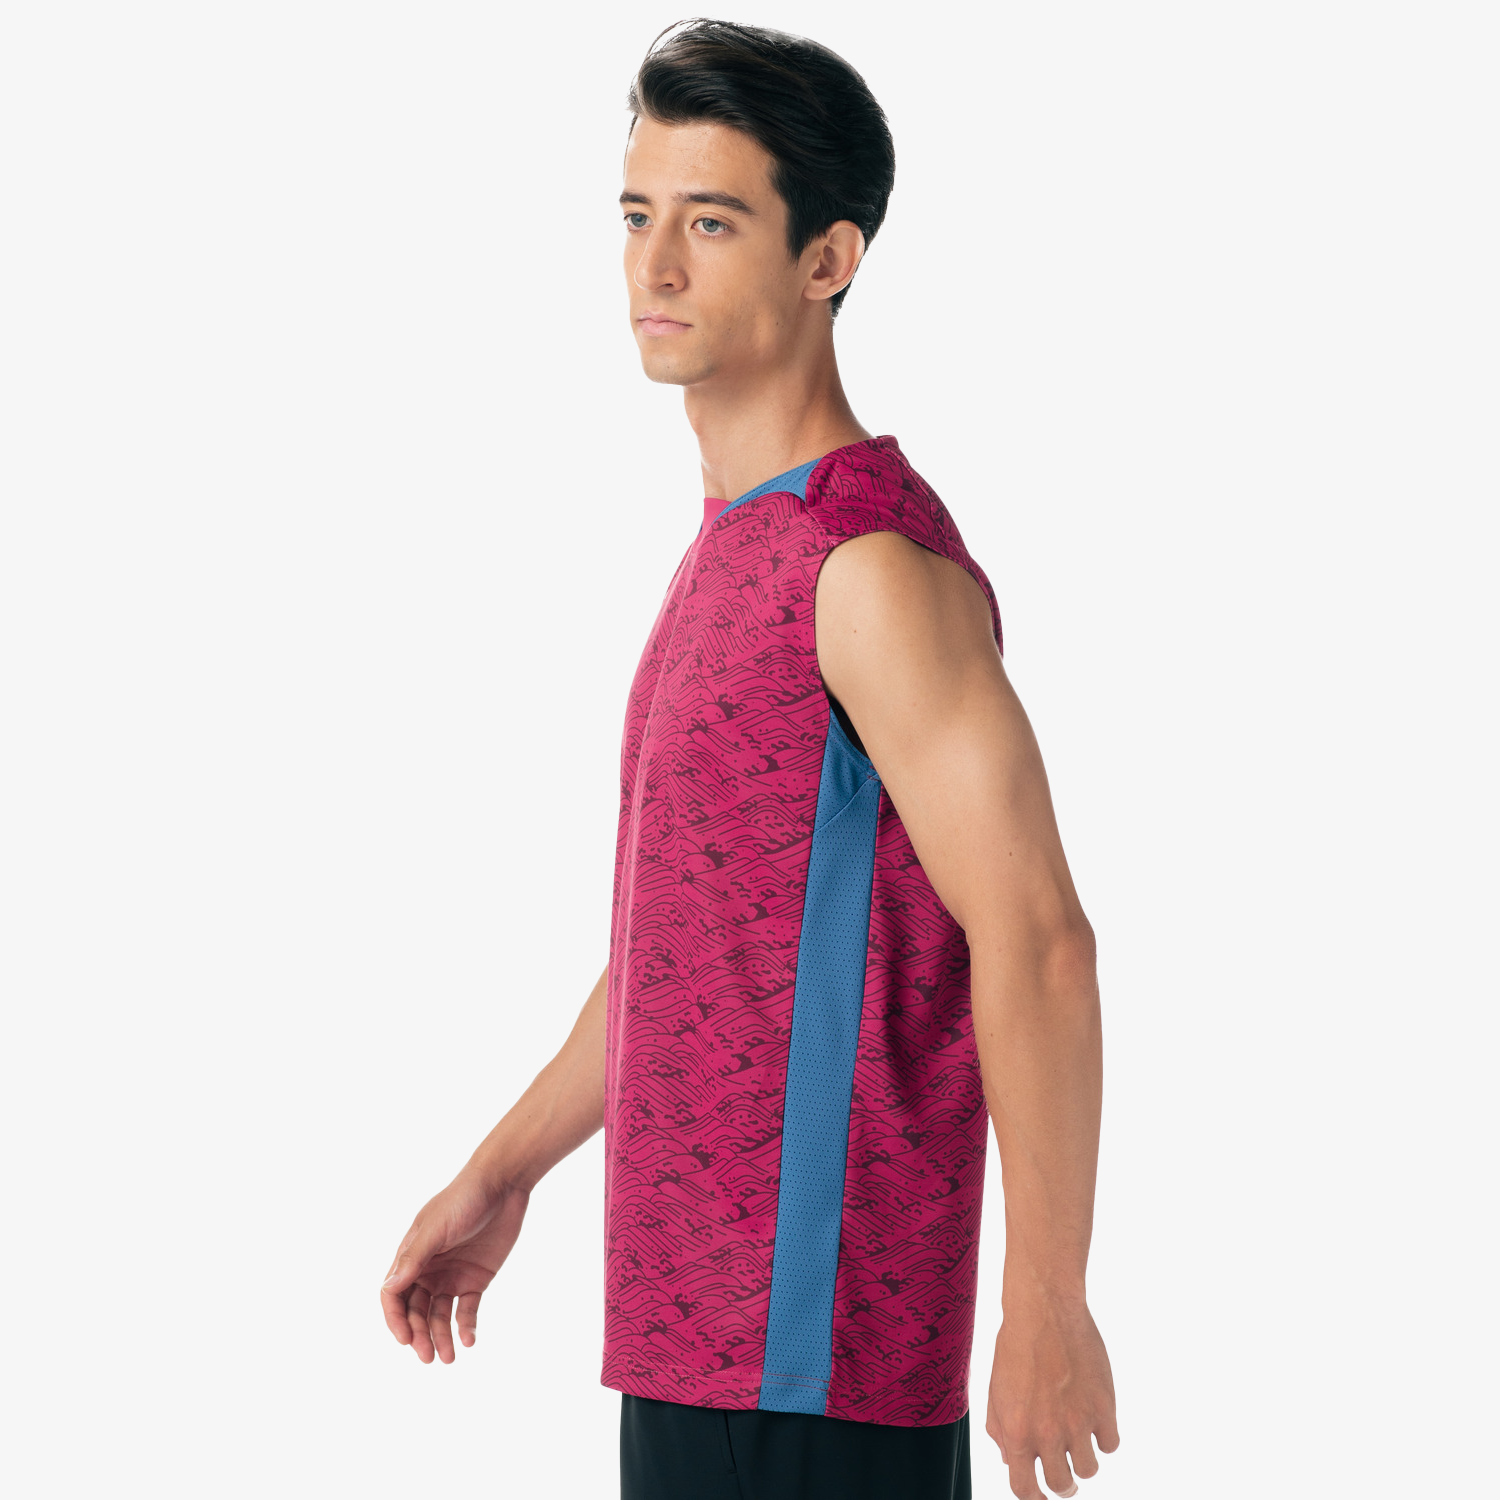 Yonex Men's Very Cool Dry Sleeveless Tournament Shirts 10614 (Grape) 